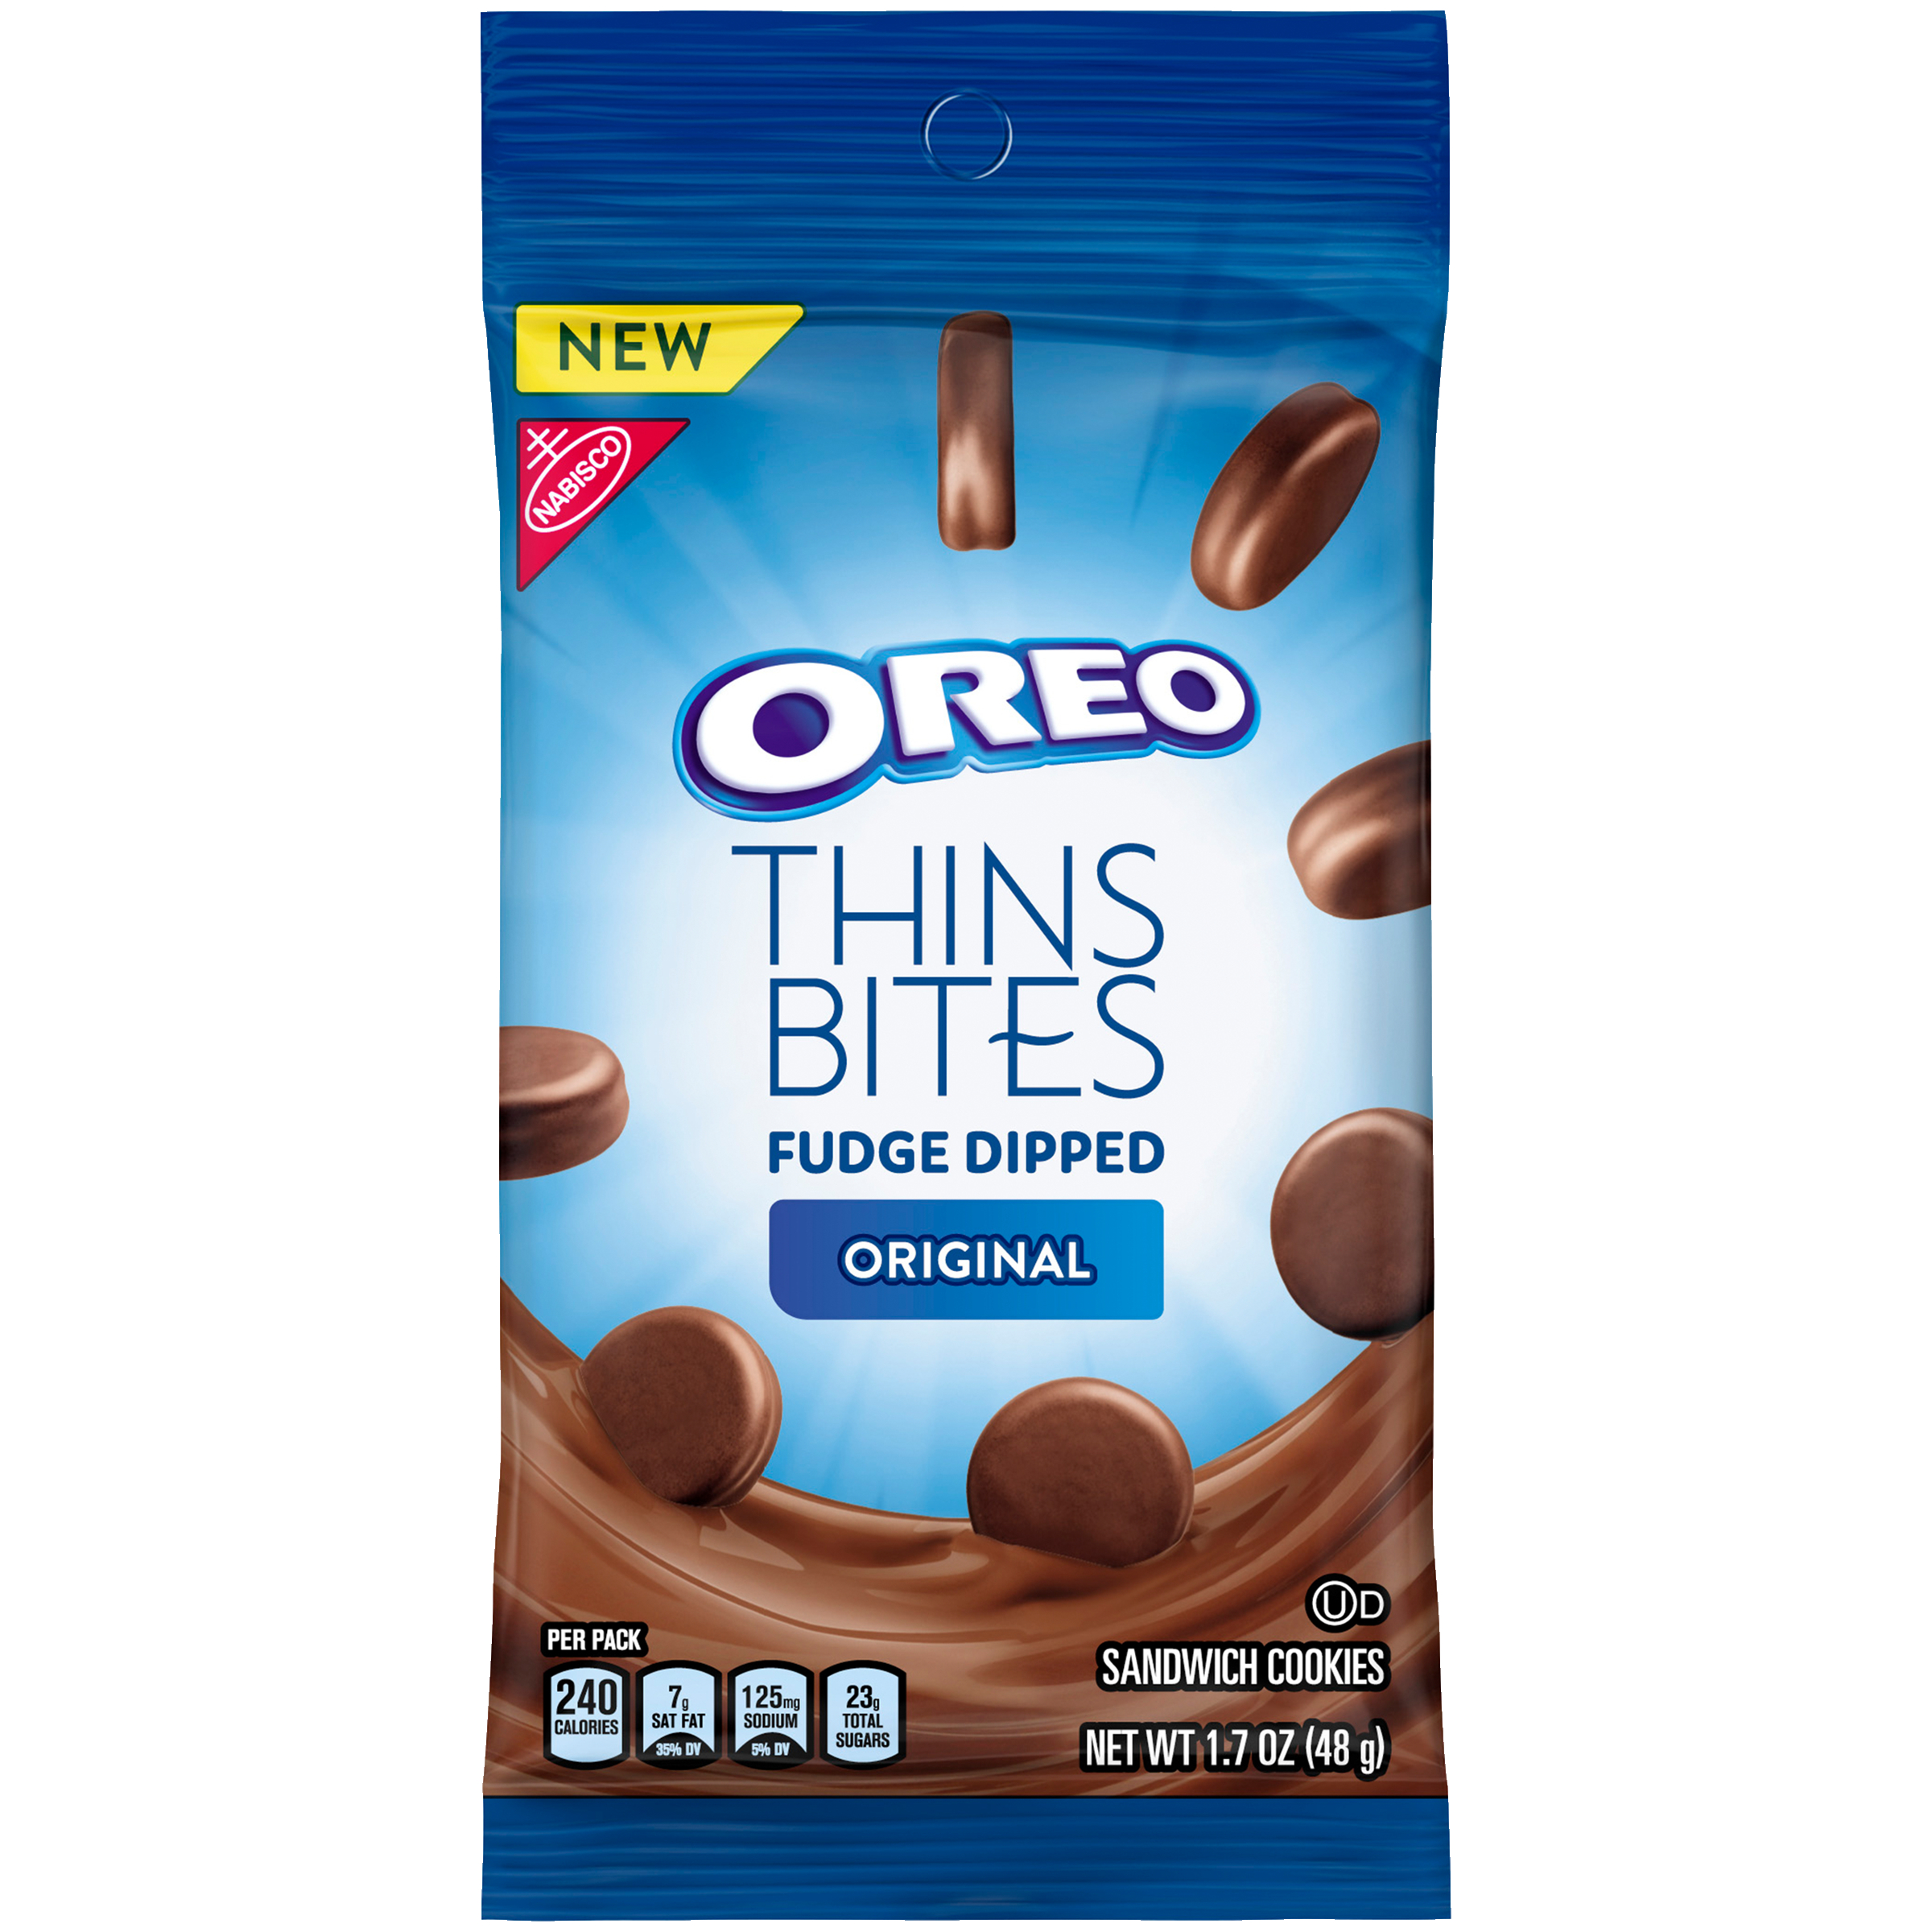 OREO Thins Bites Fudge Dipped Cookies 4/1.7OZ